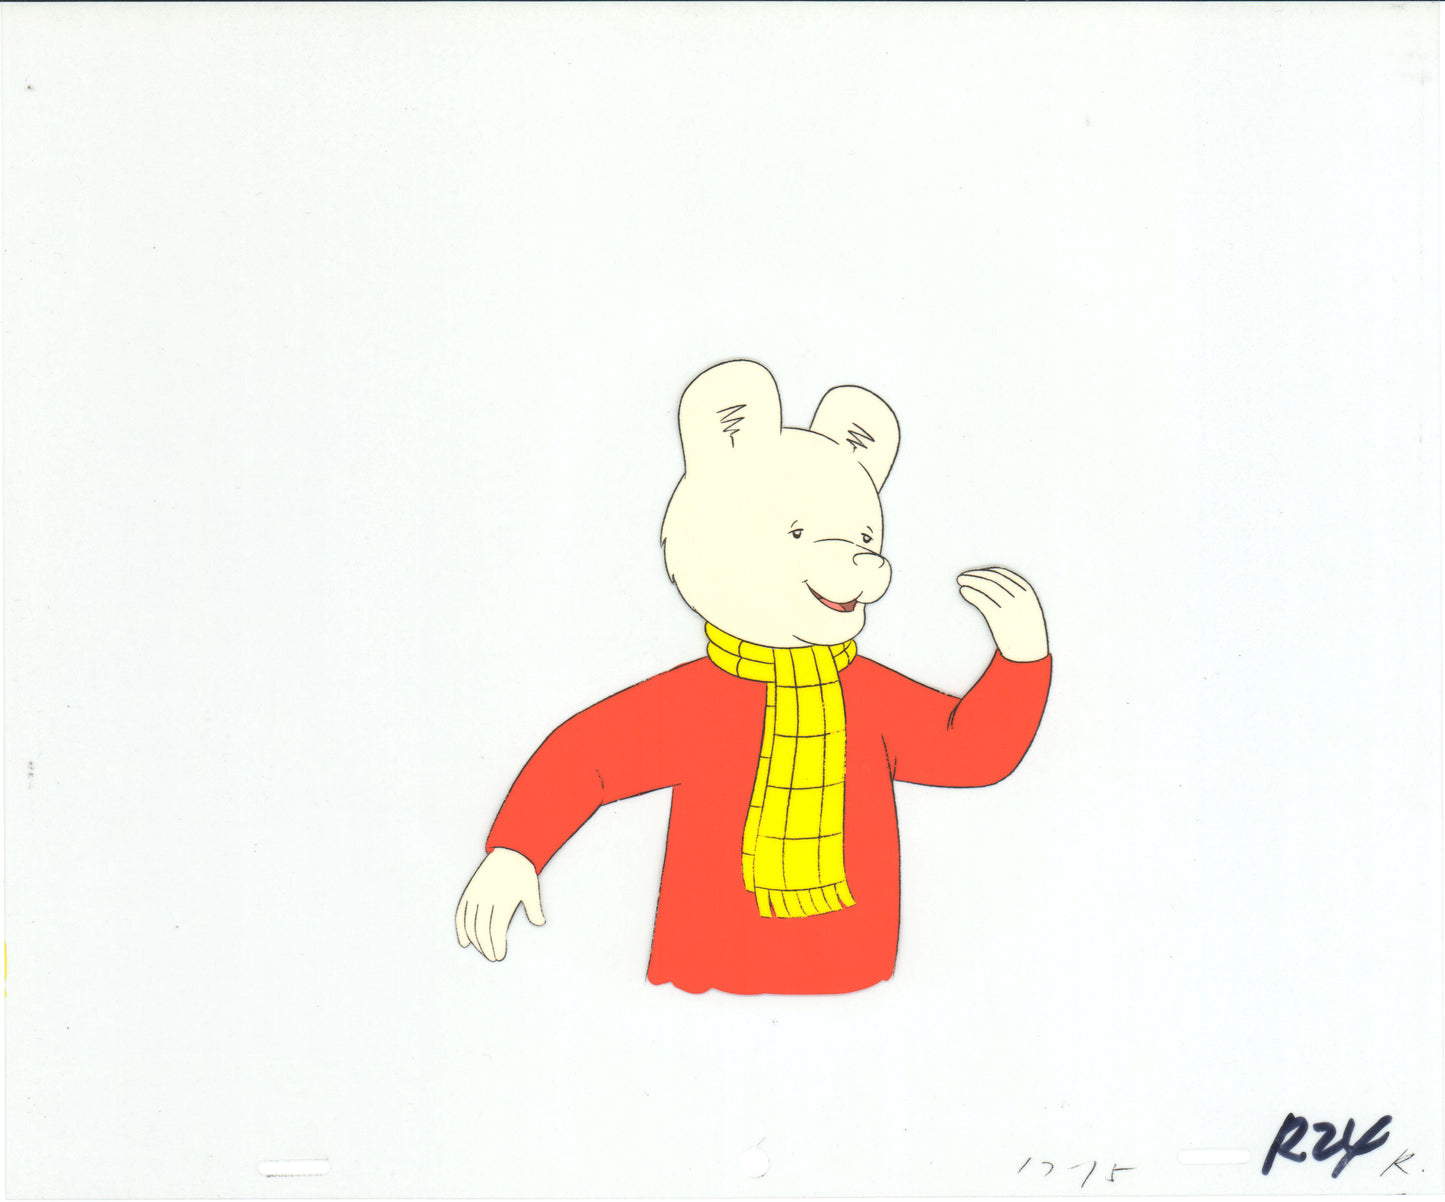 RUPERT Bear Original Production Animation Cel from the Cartoon by Nelvana Tourtel Animation 1990s 8-201